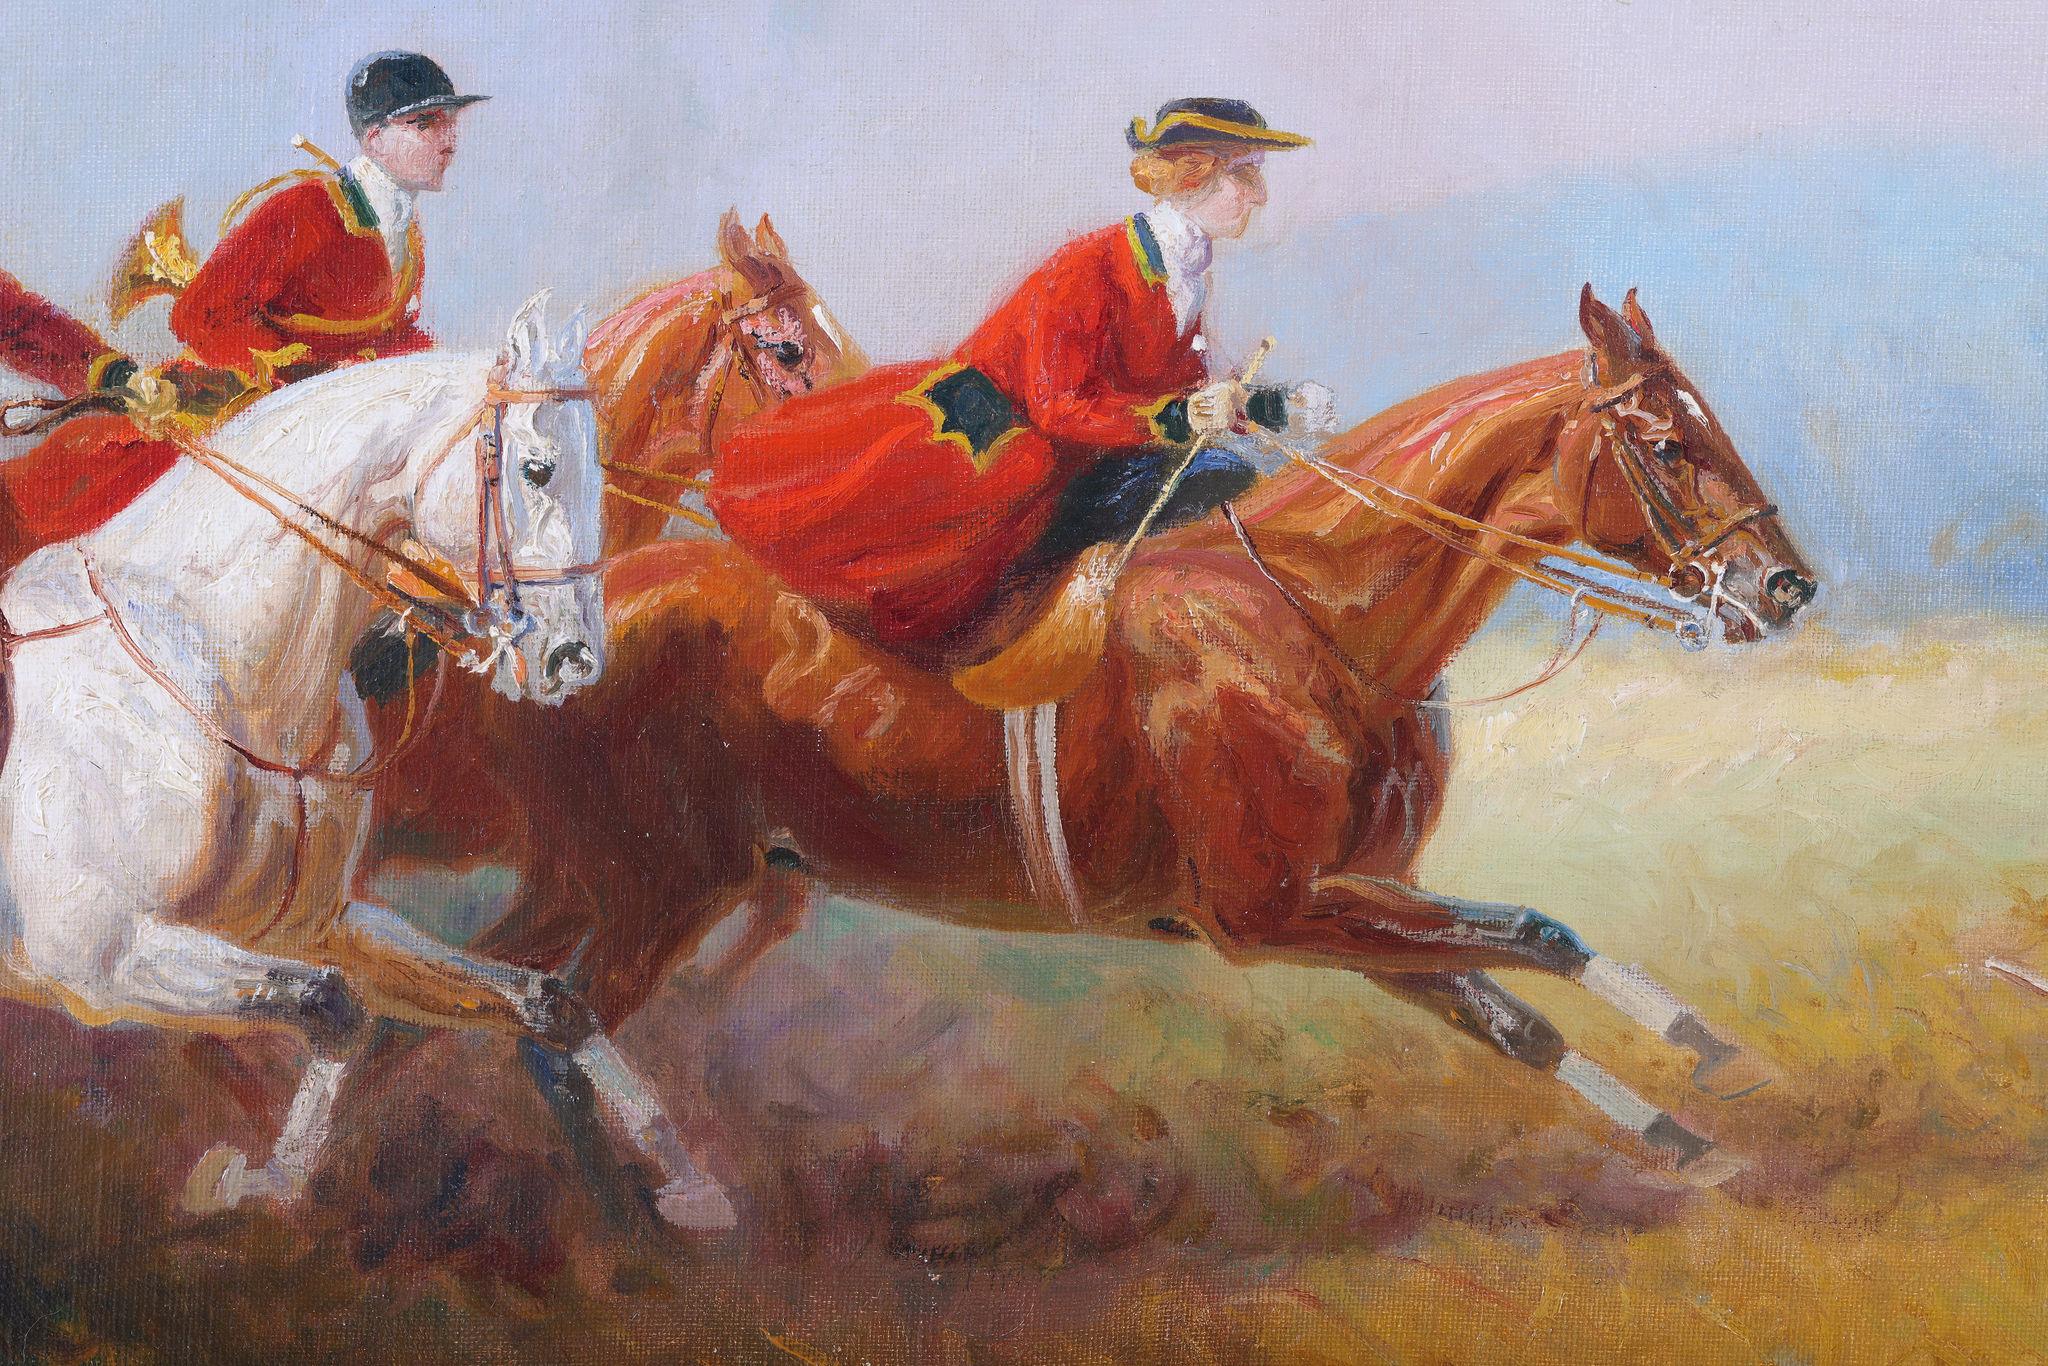 Eugene Pechaubes
1890 - 1967

Canvas Size: 24 x 43